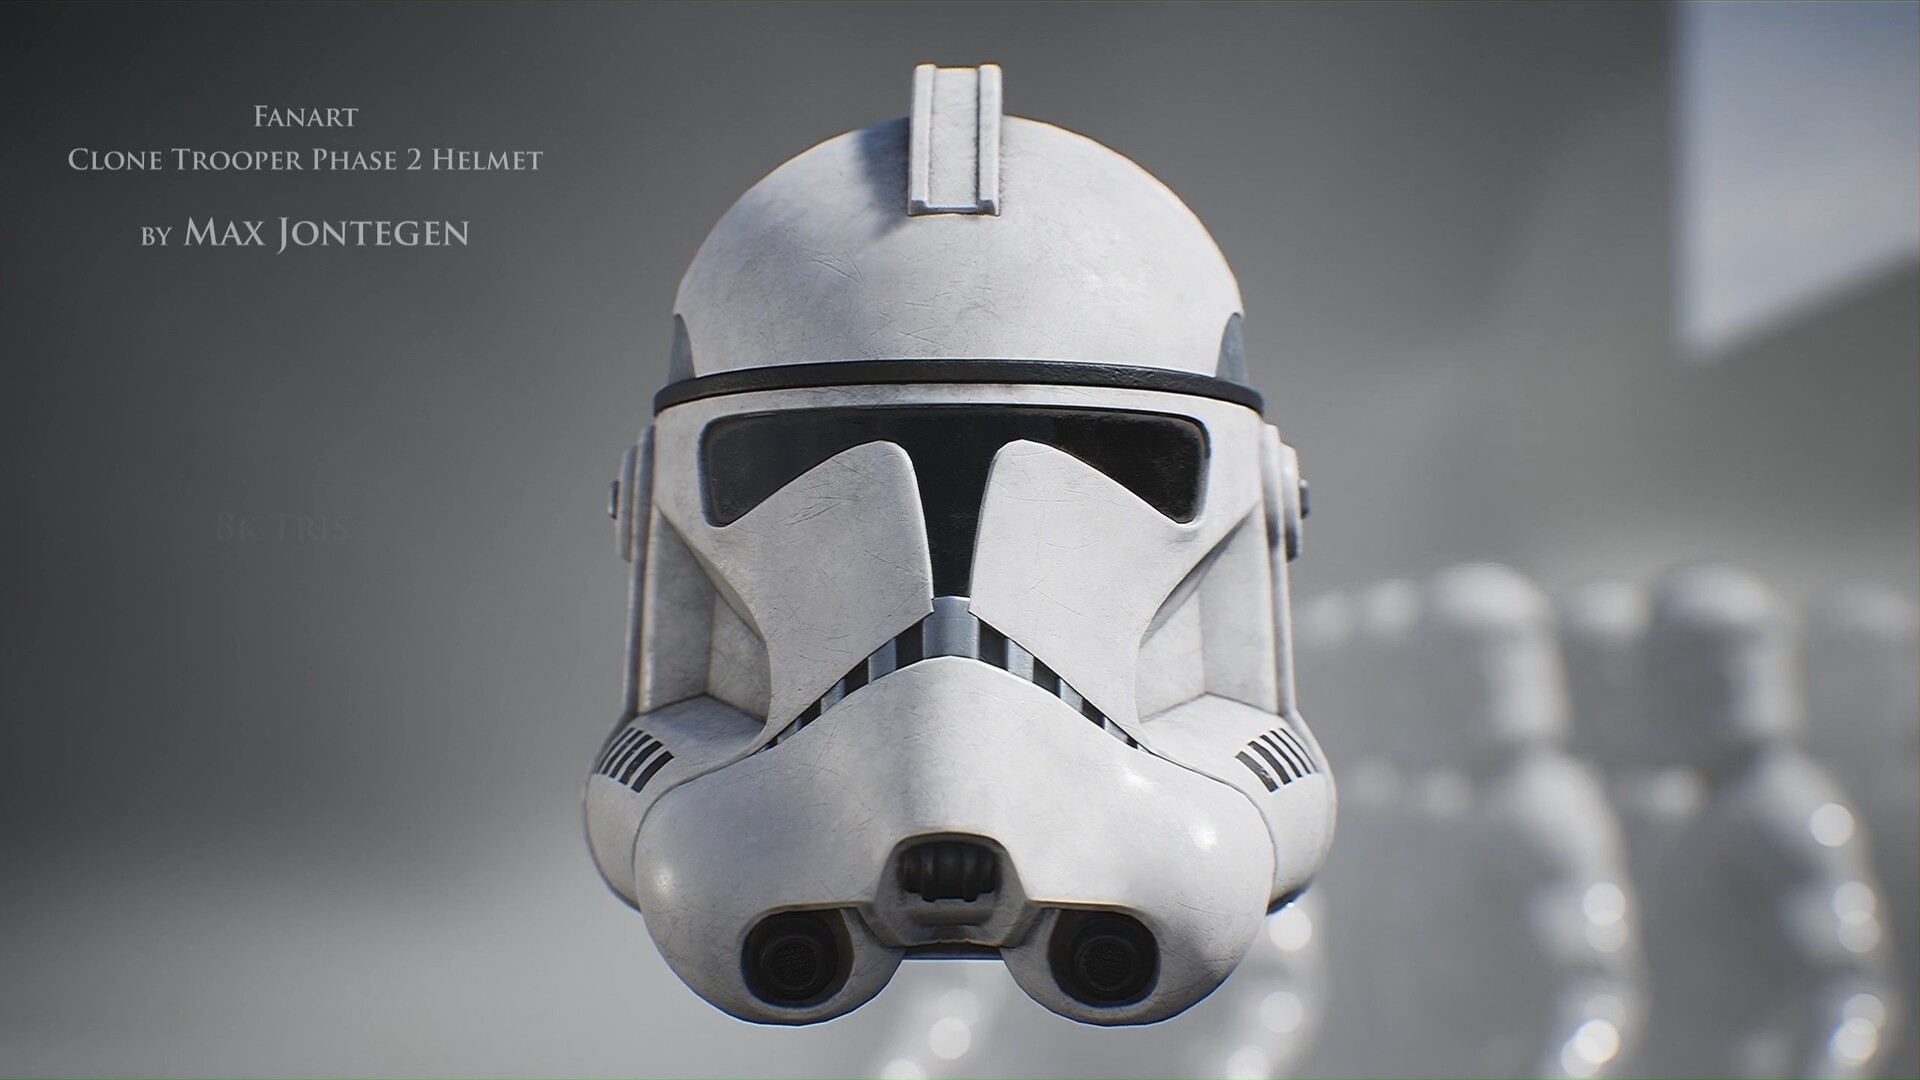 Clone Trooper Phase 2 Helmet - Fanart.